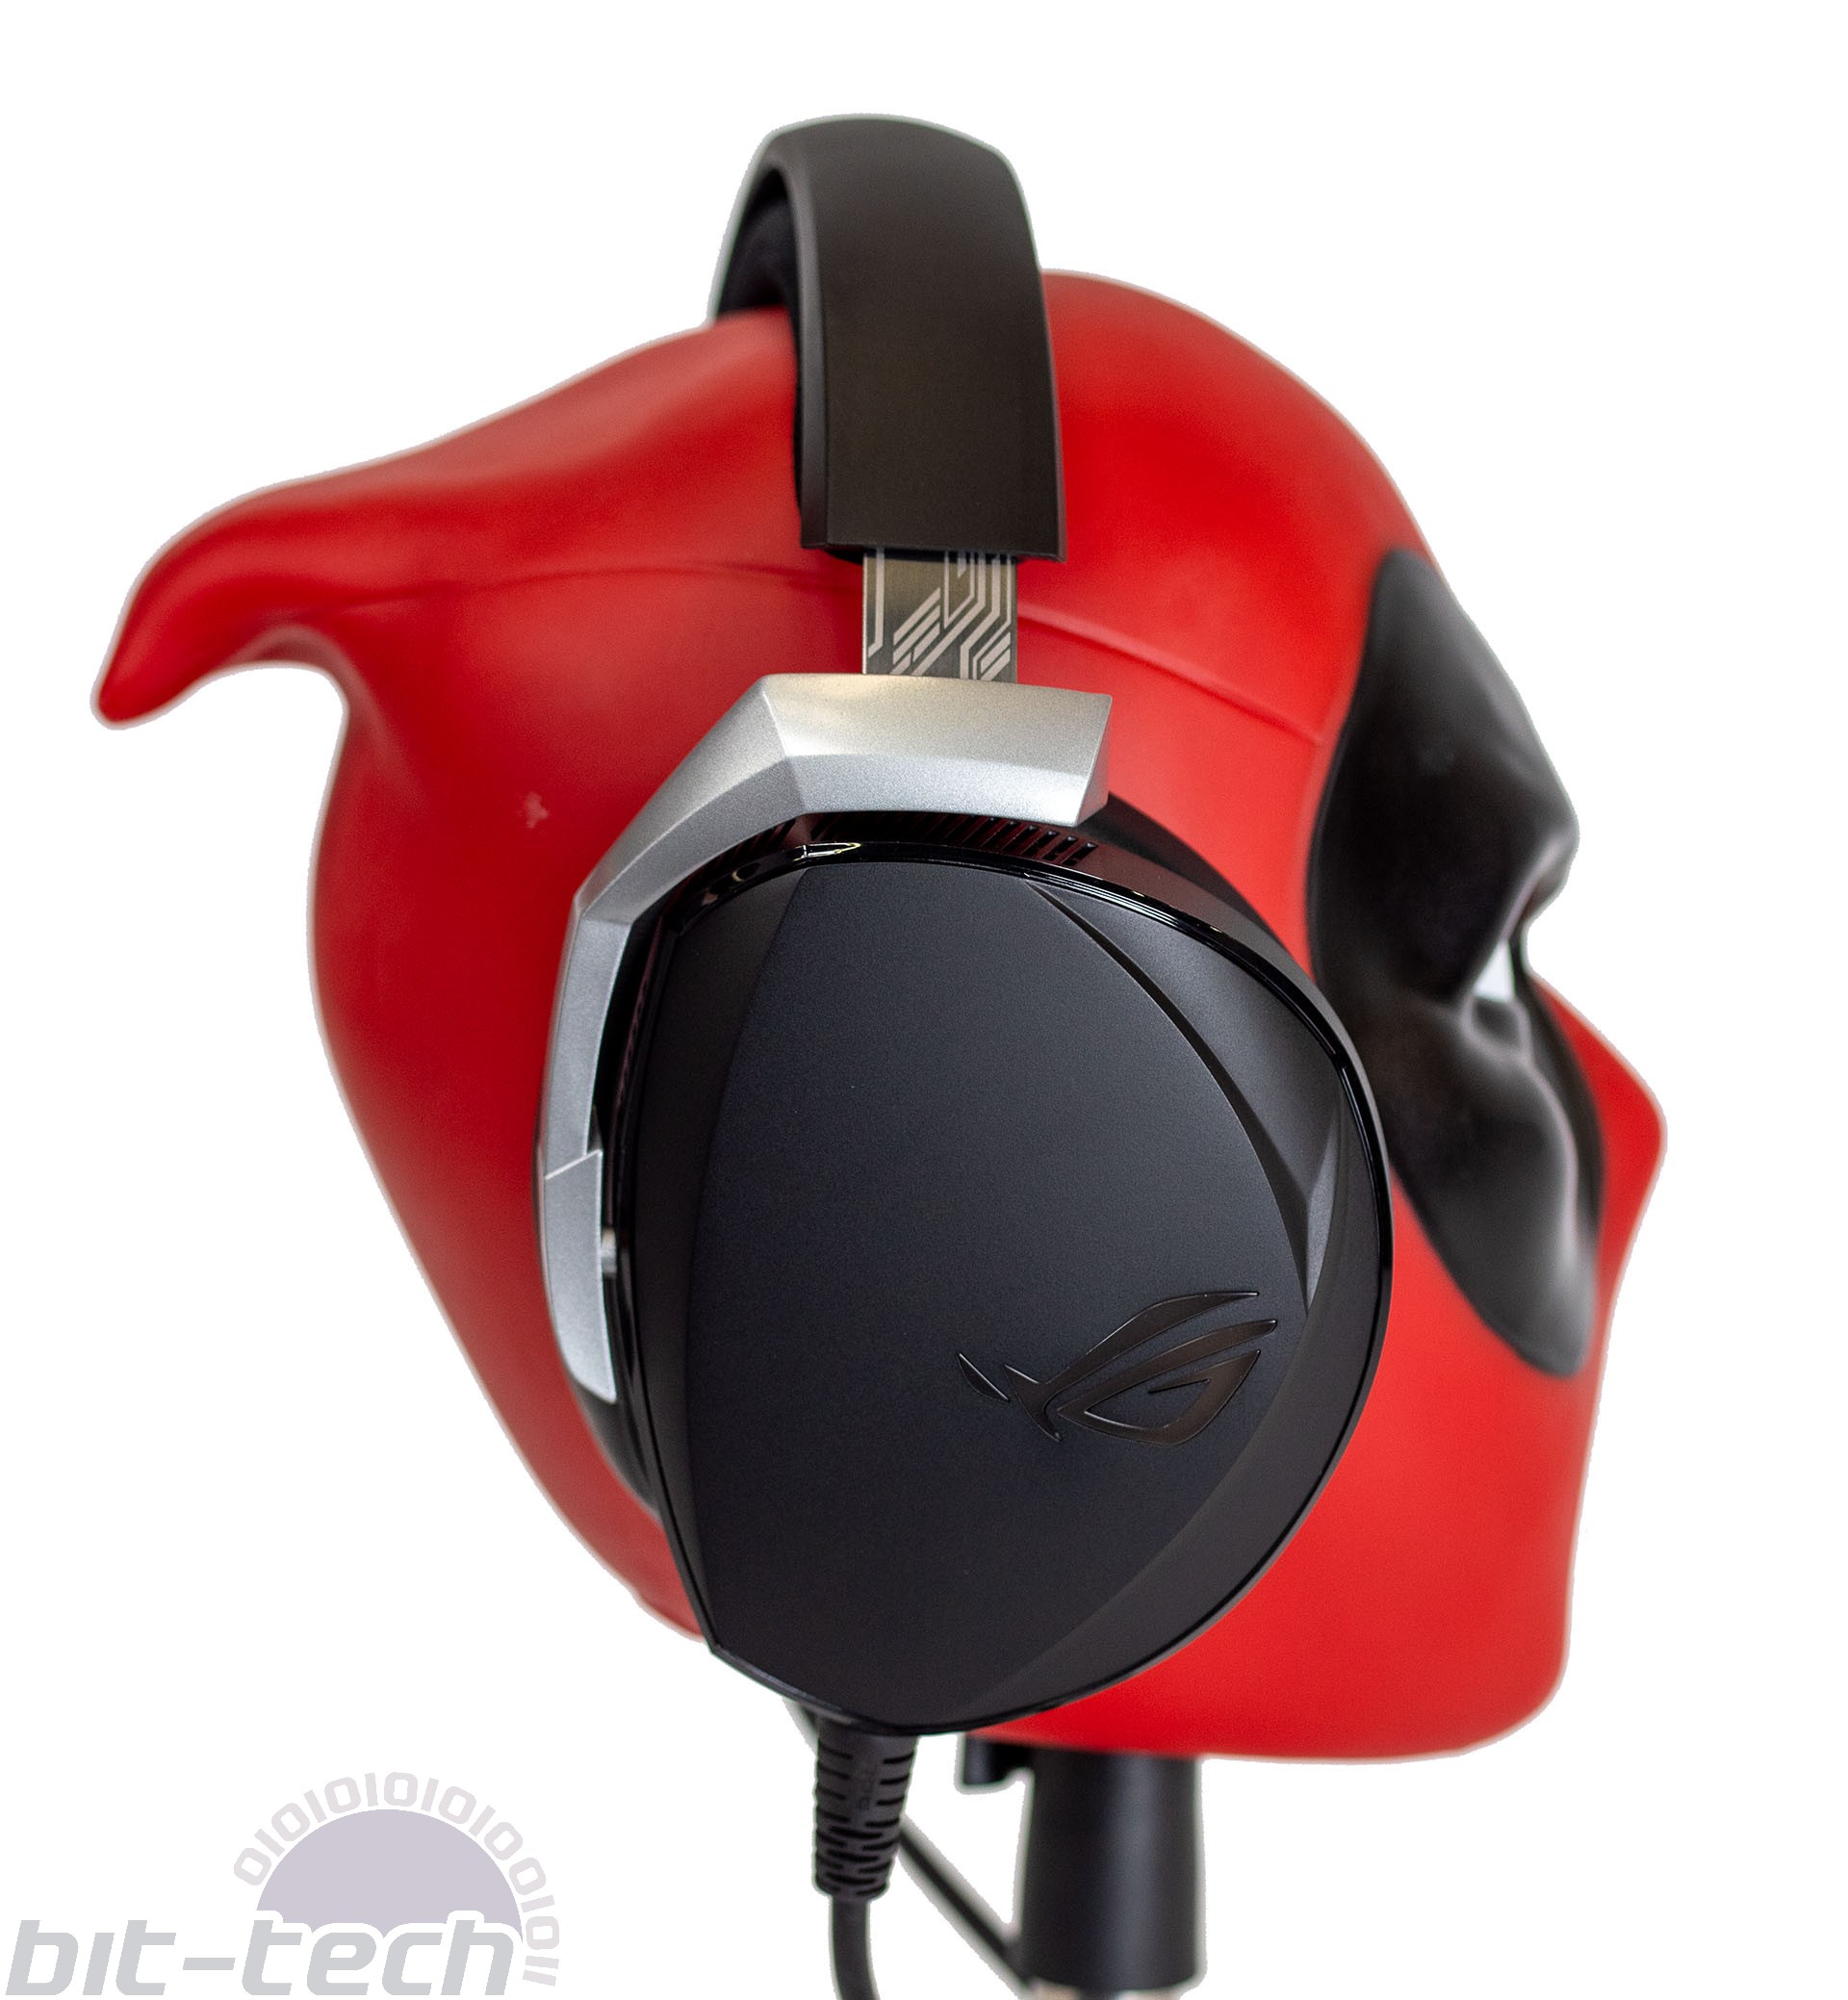 ASUS ROG Theta 7.1 review — Flagship gaming headset 